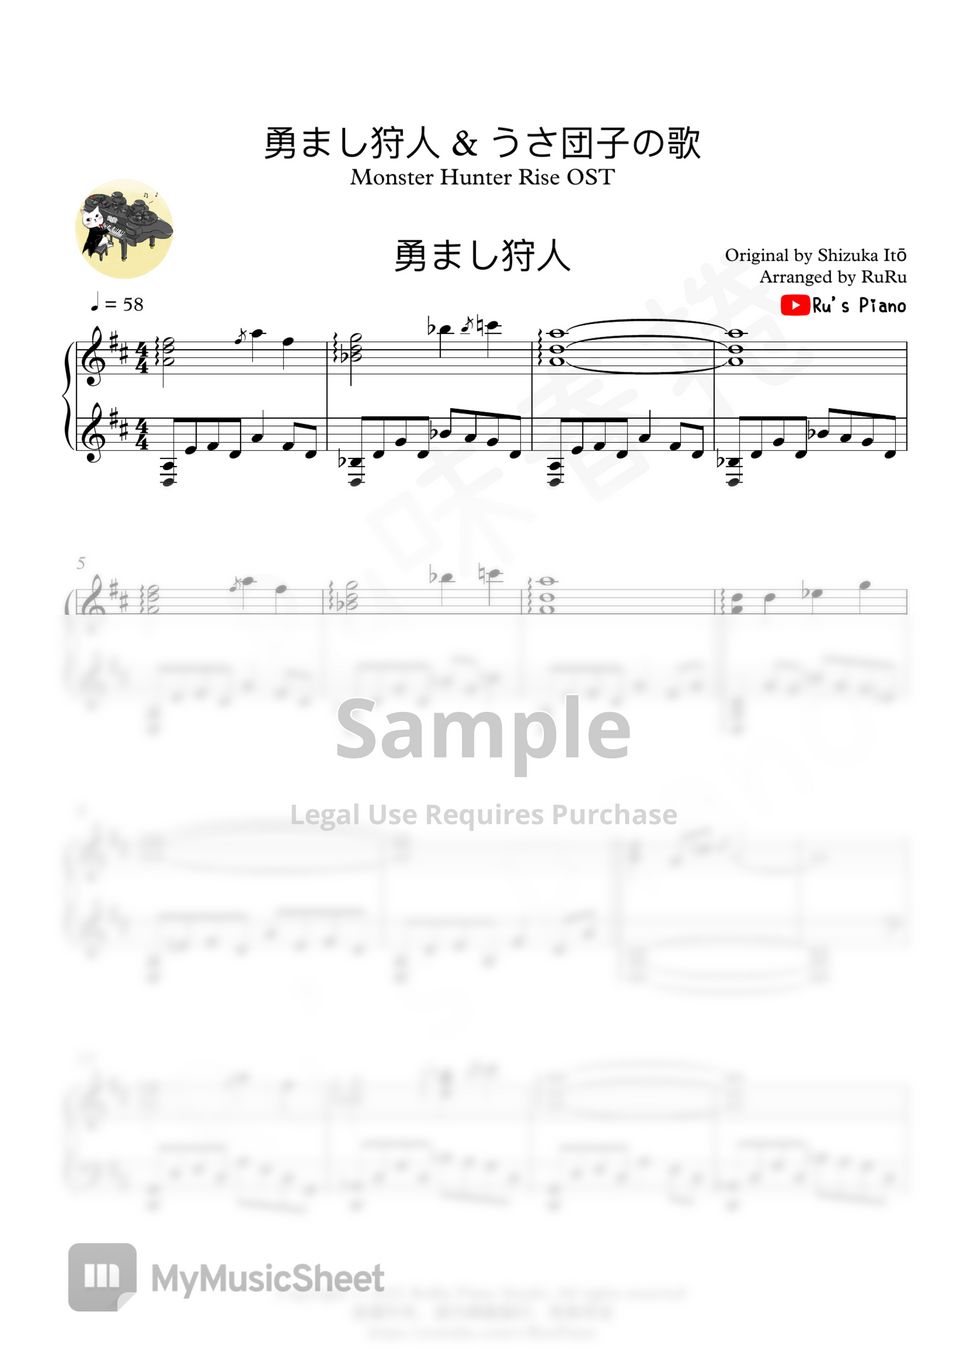 Monster Hunter RISE - 「勇まし狩人 & うさ団子の歌」(Brave Hunters & Bunny Dango Song) by Ru's Piano